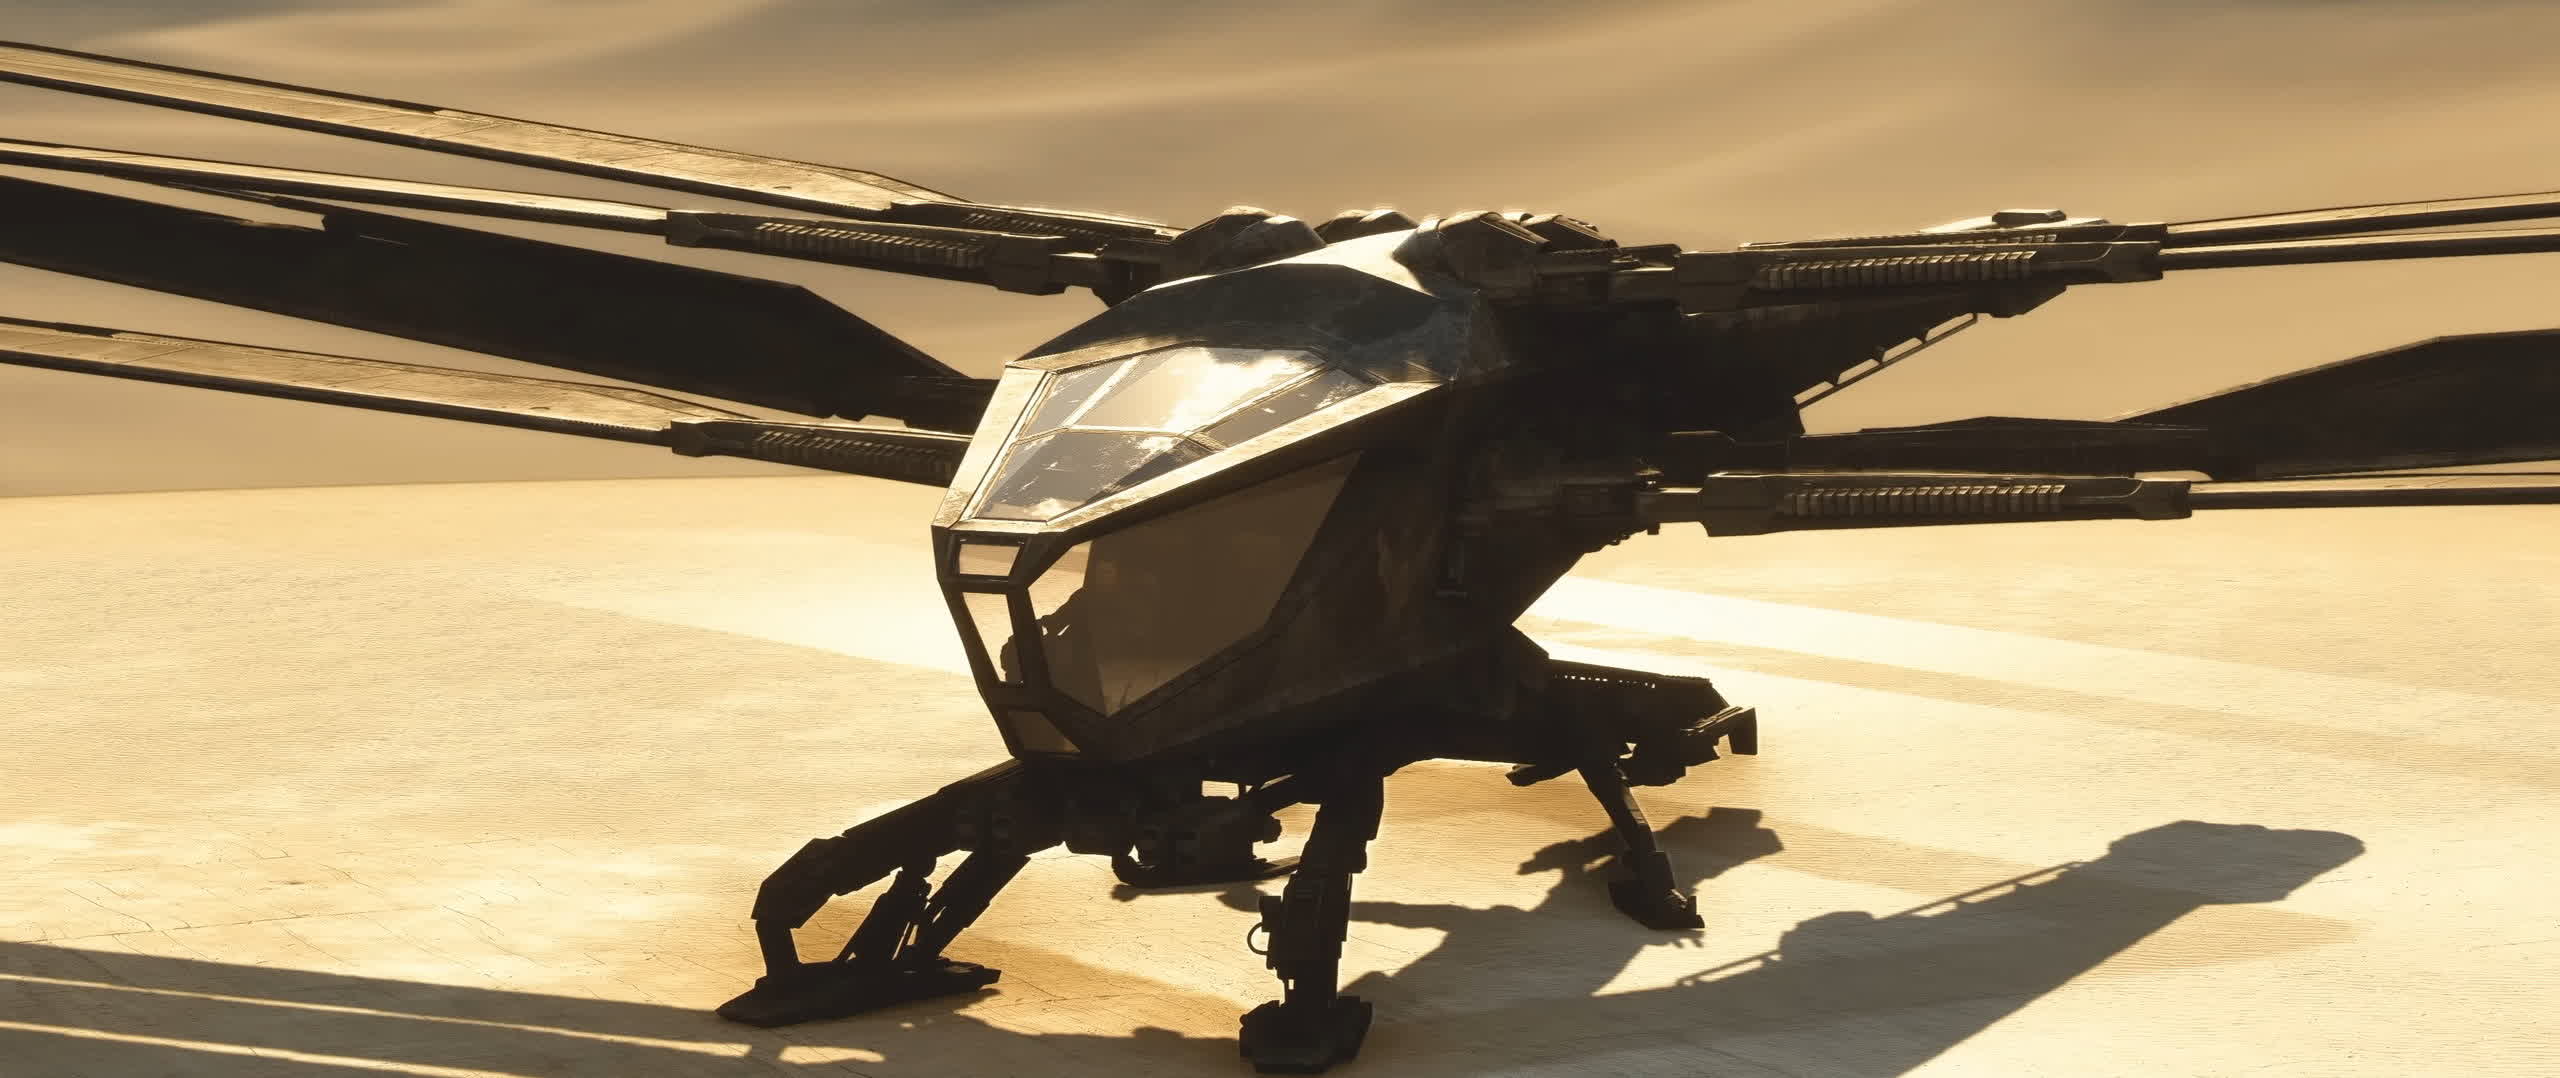 Microsoft Flight Simulator takes players to Dune's sci-fi desert world of Arrakis